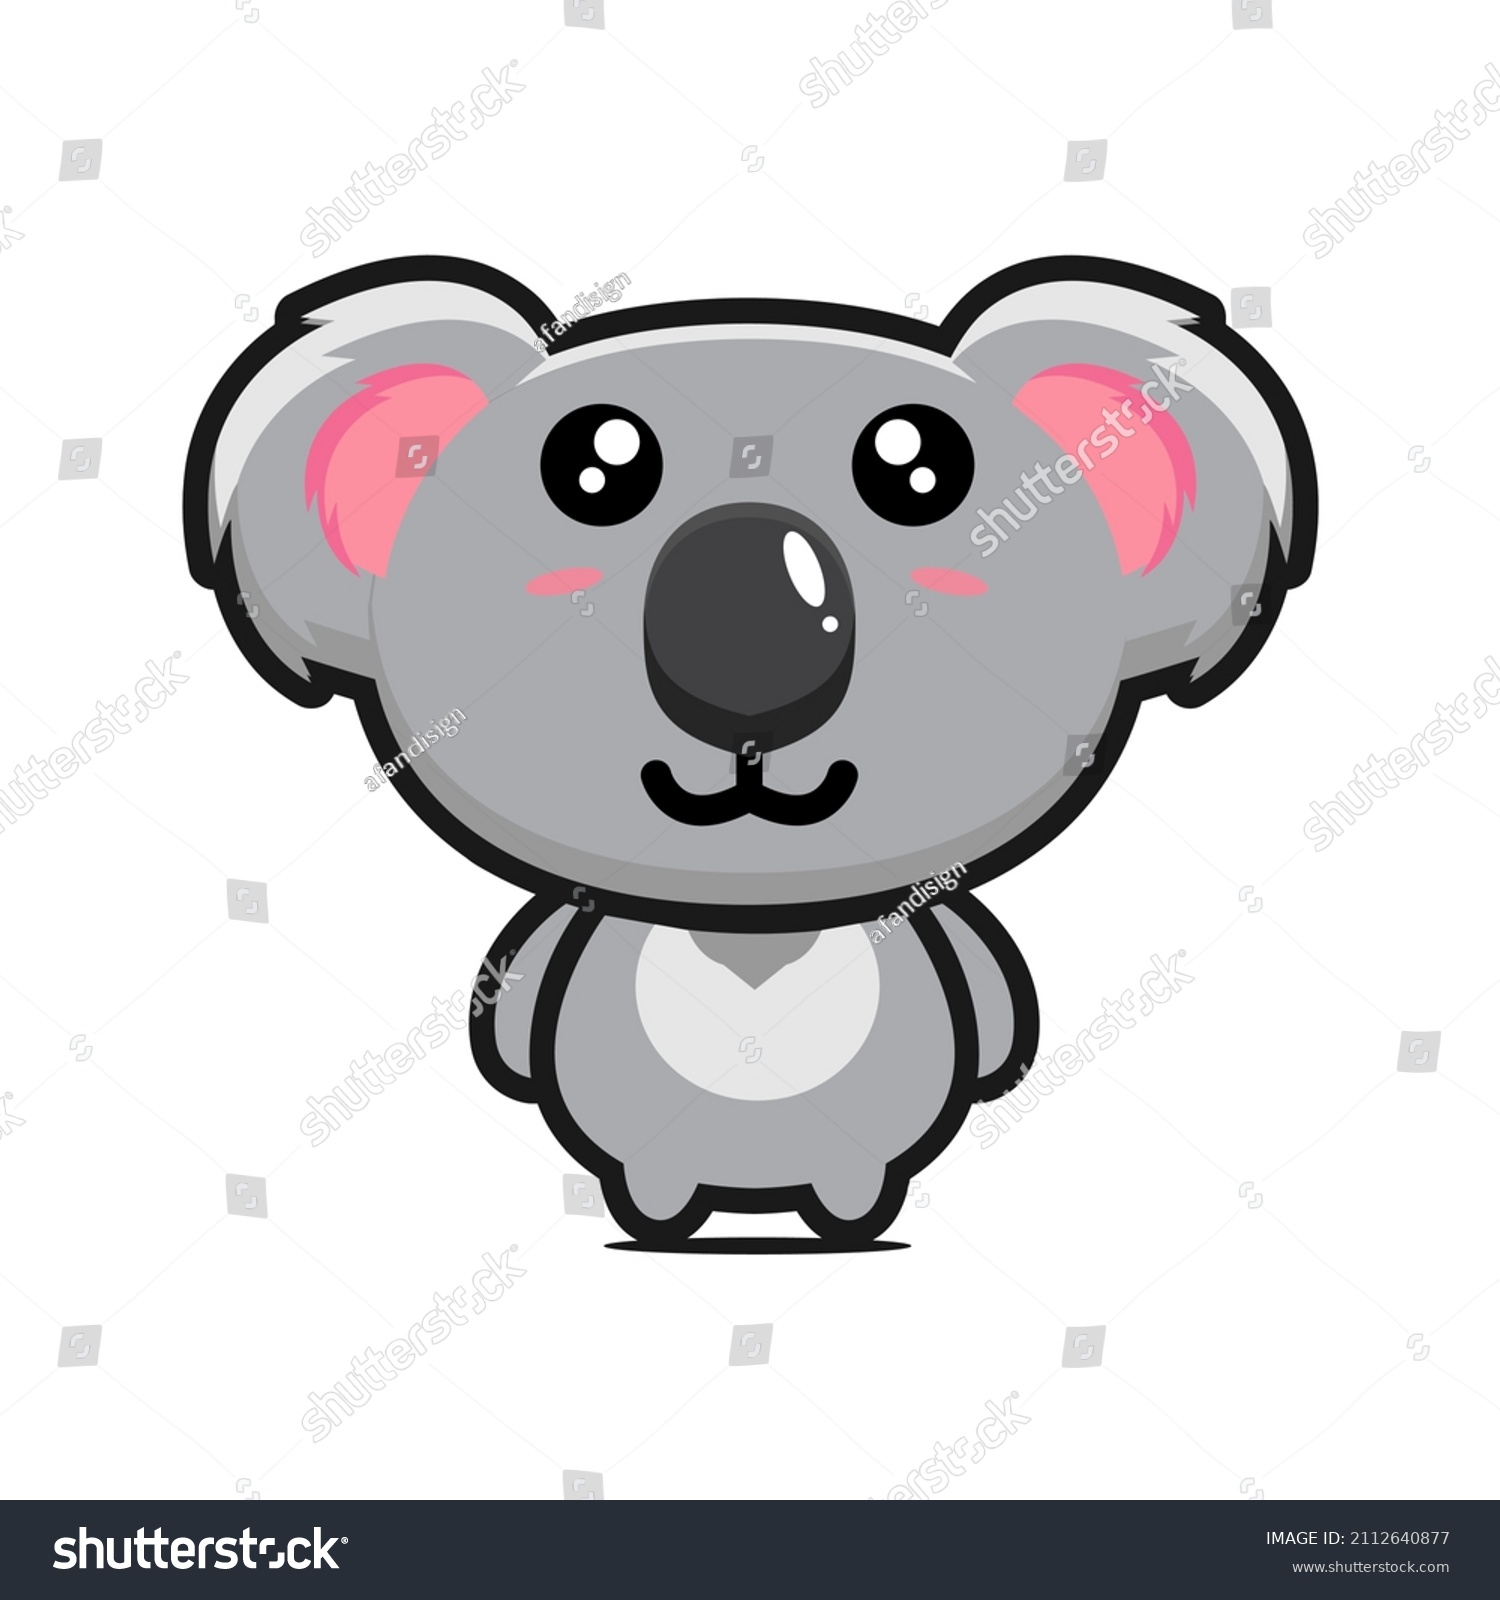 SVG of cute koala design cartoon free vector eps, cdr, ai, svg vector illustration graphic art svg